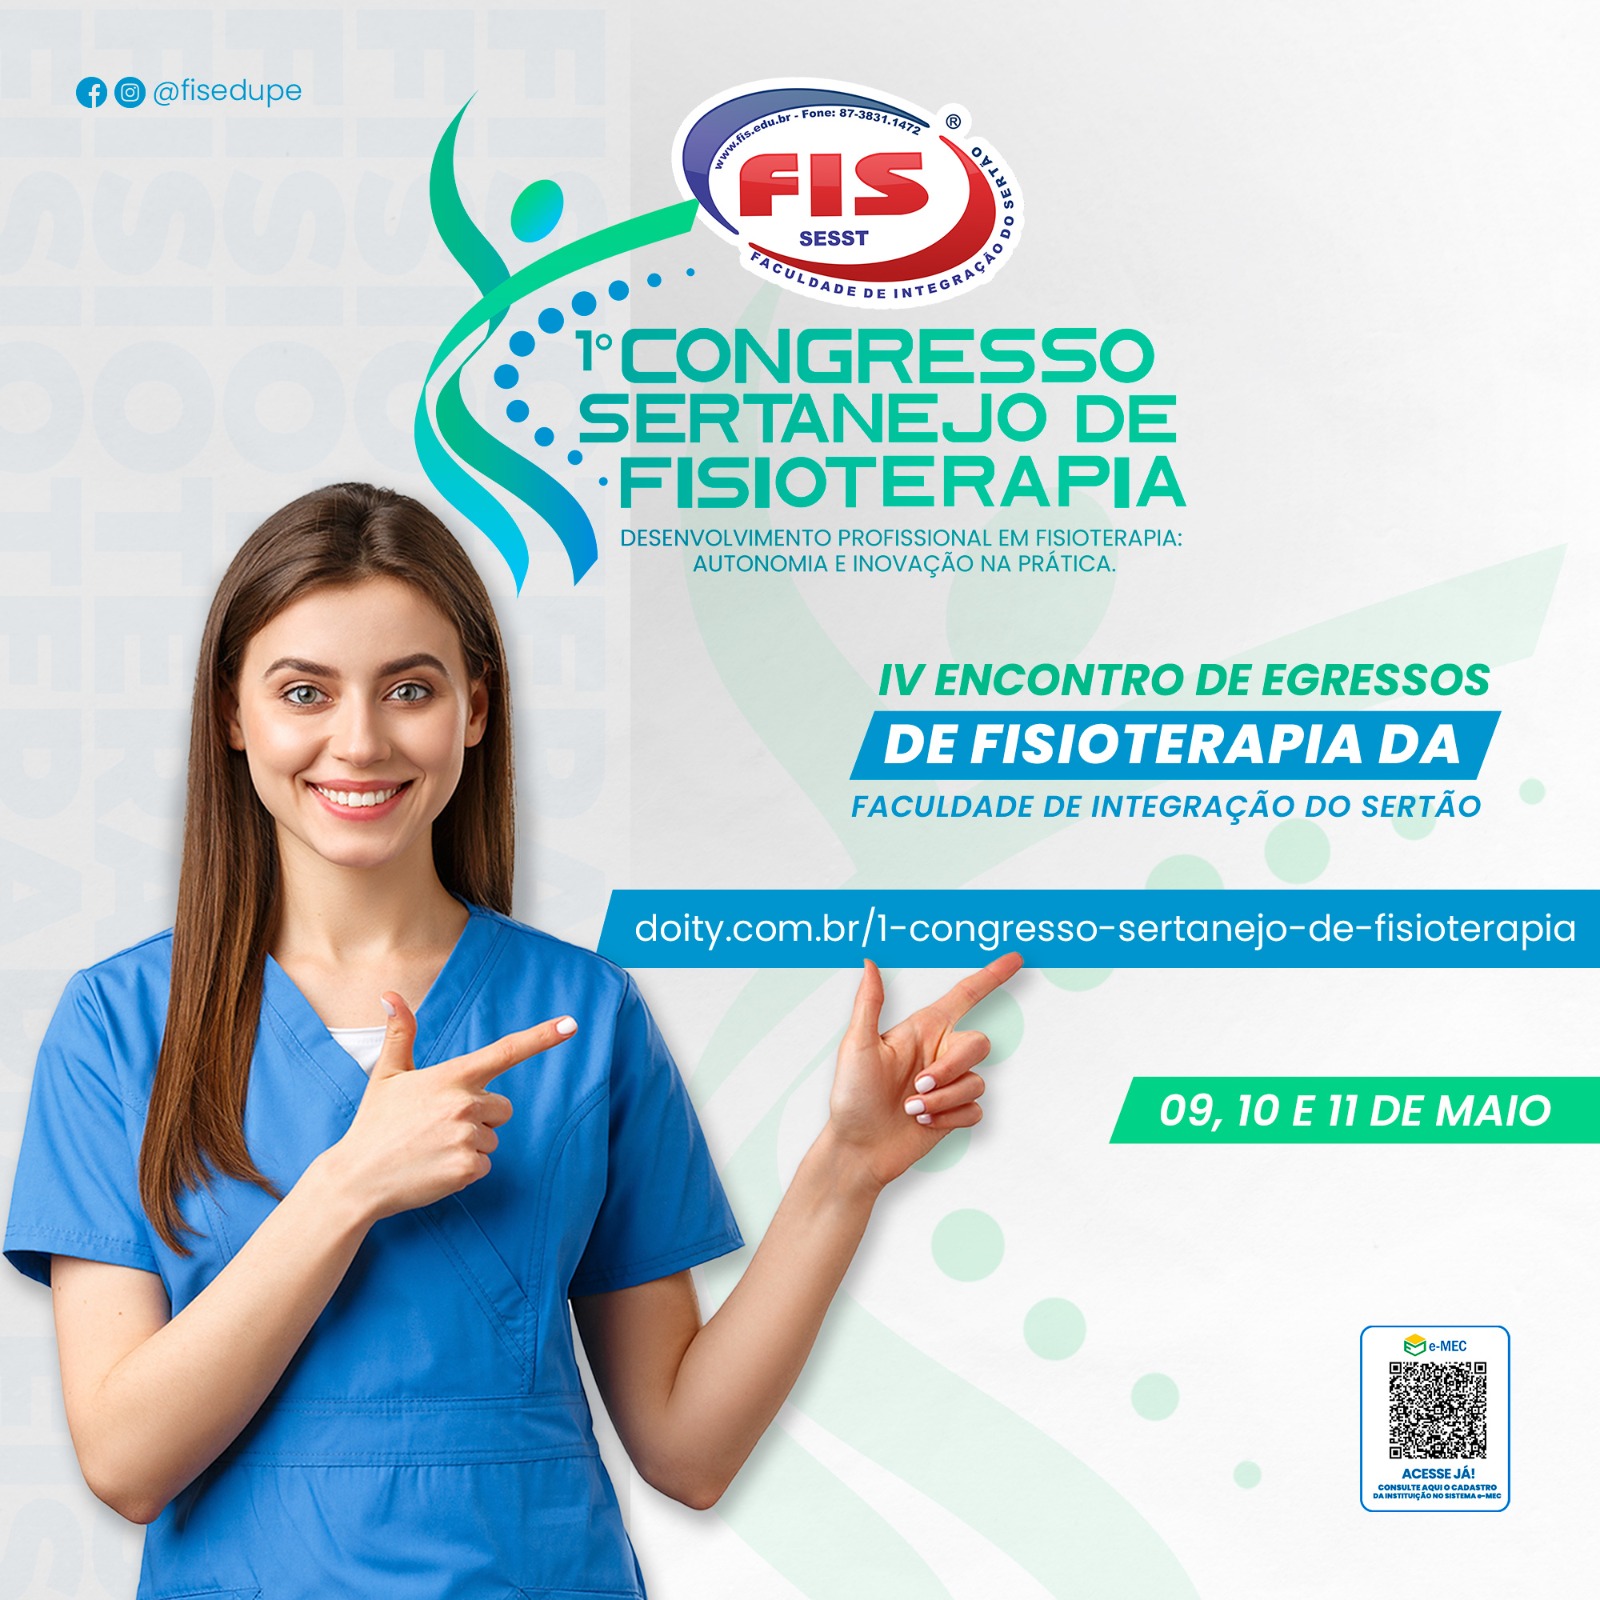 Serra Talhada sedia o 1º Congresso Sertanejo de Fisioterapia na FIS